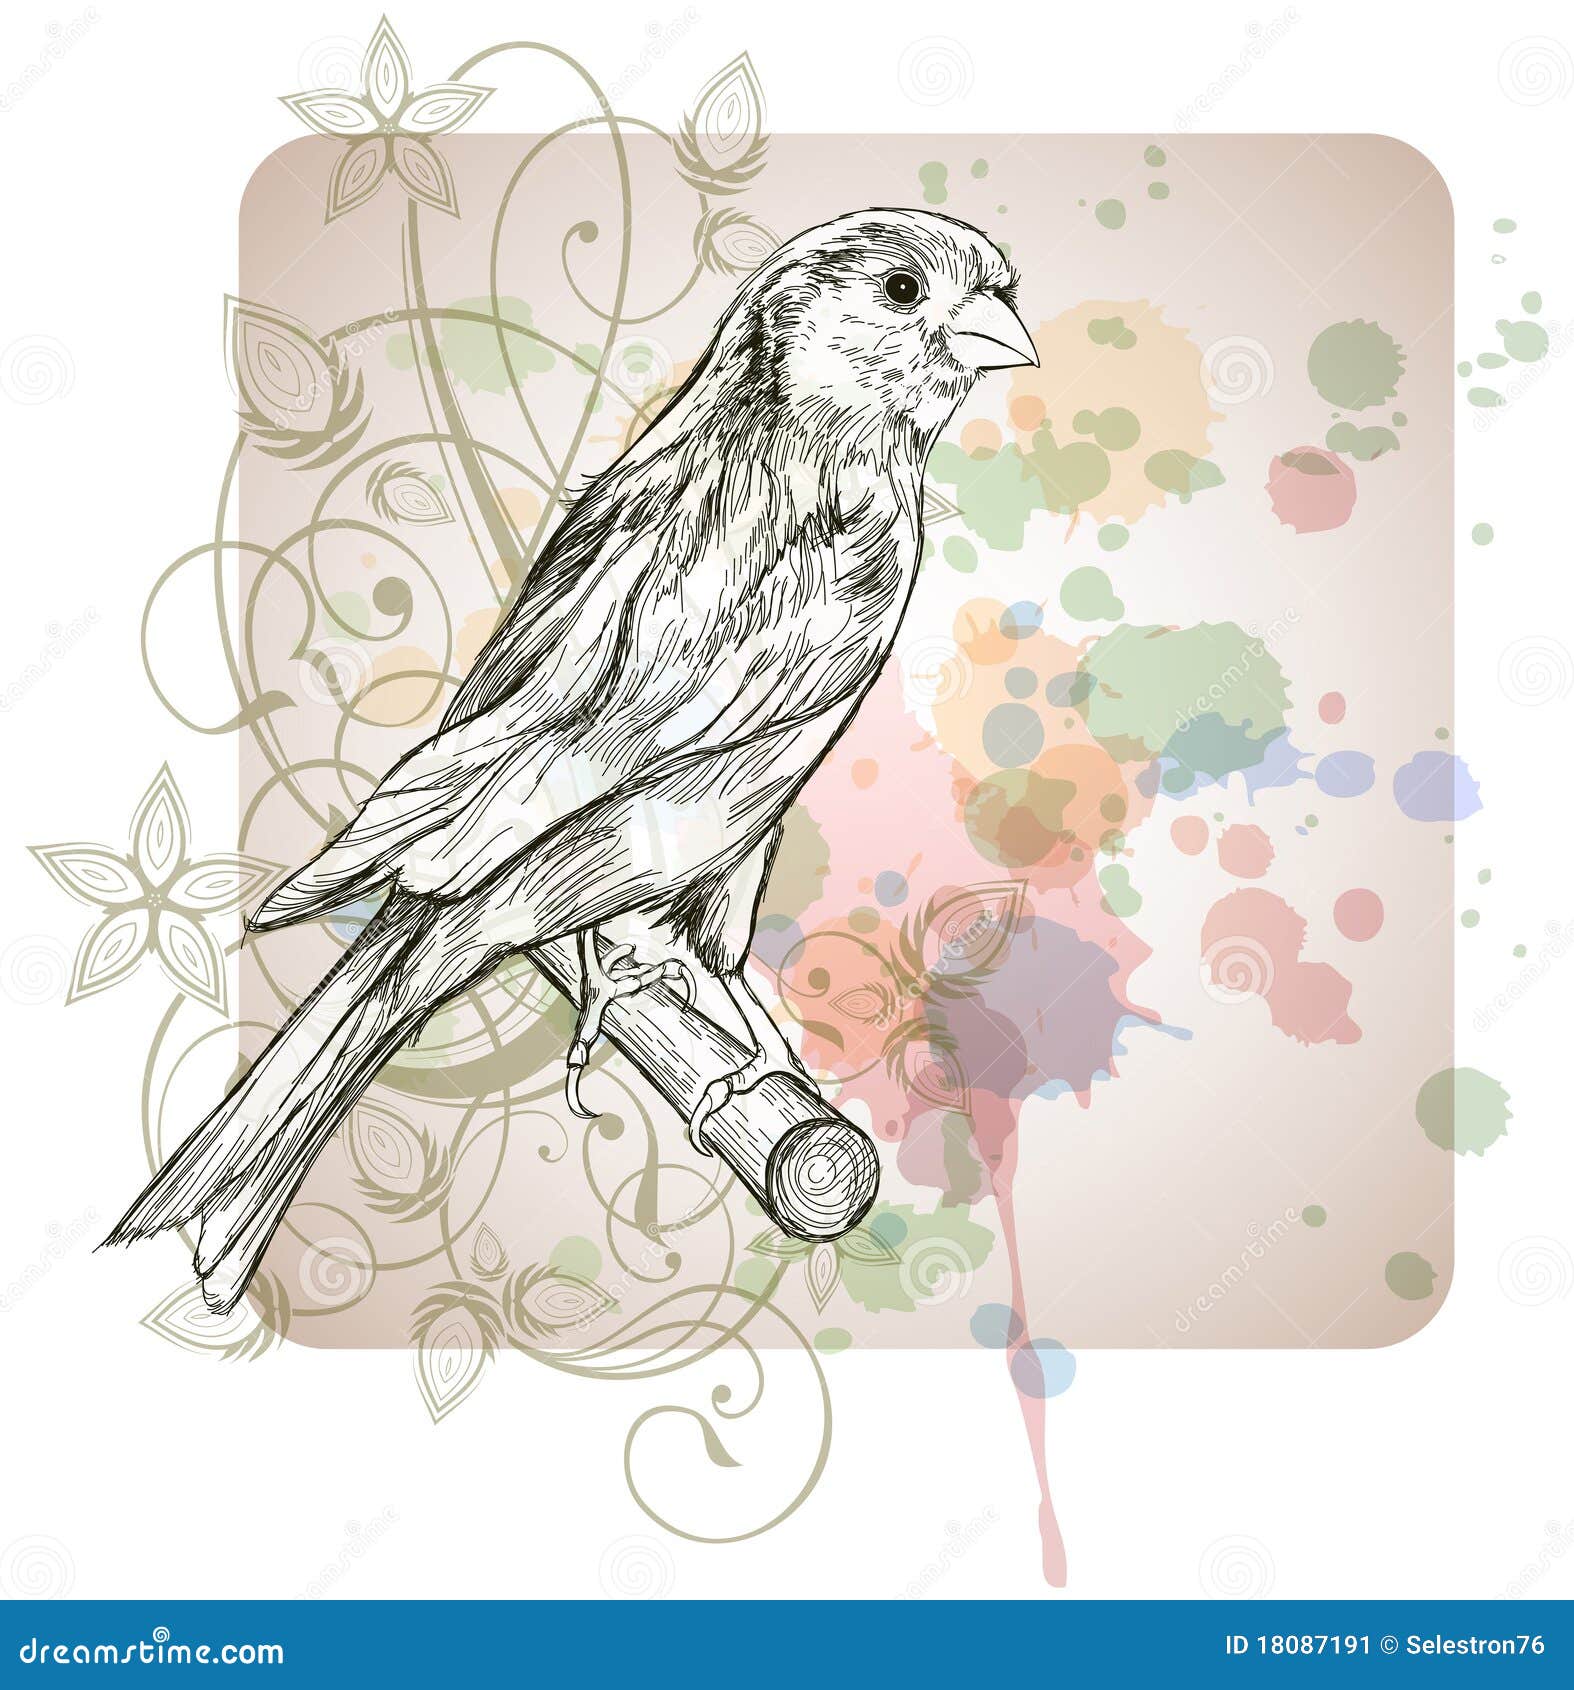 60 Drawing Of Wild Canary Bird Illustrations RoyaltyFree Vector Graphics   Clip Art  iStock